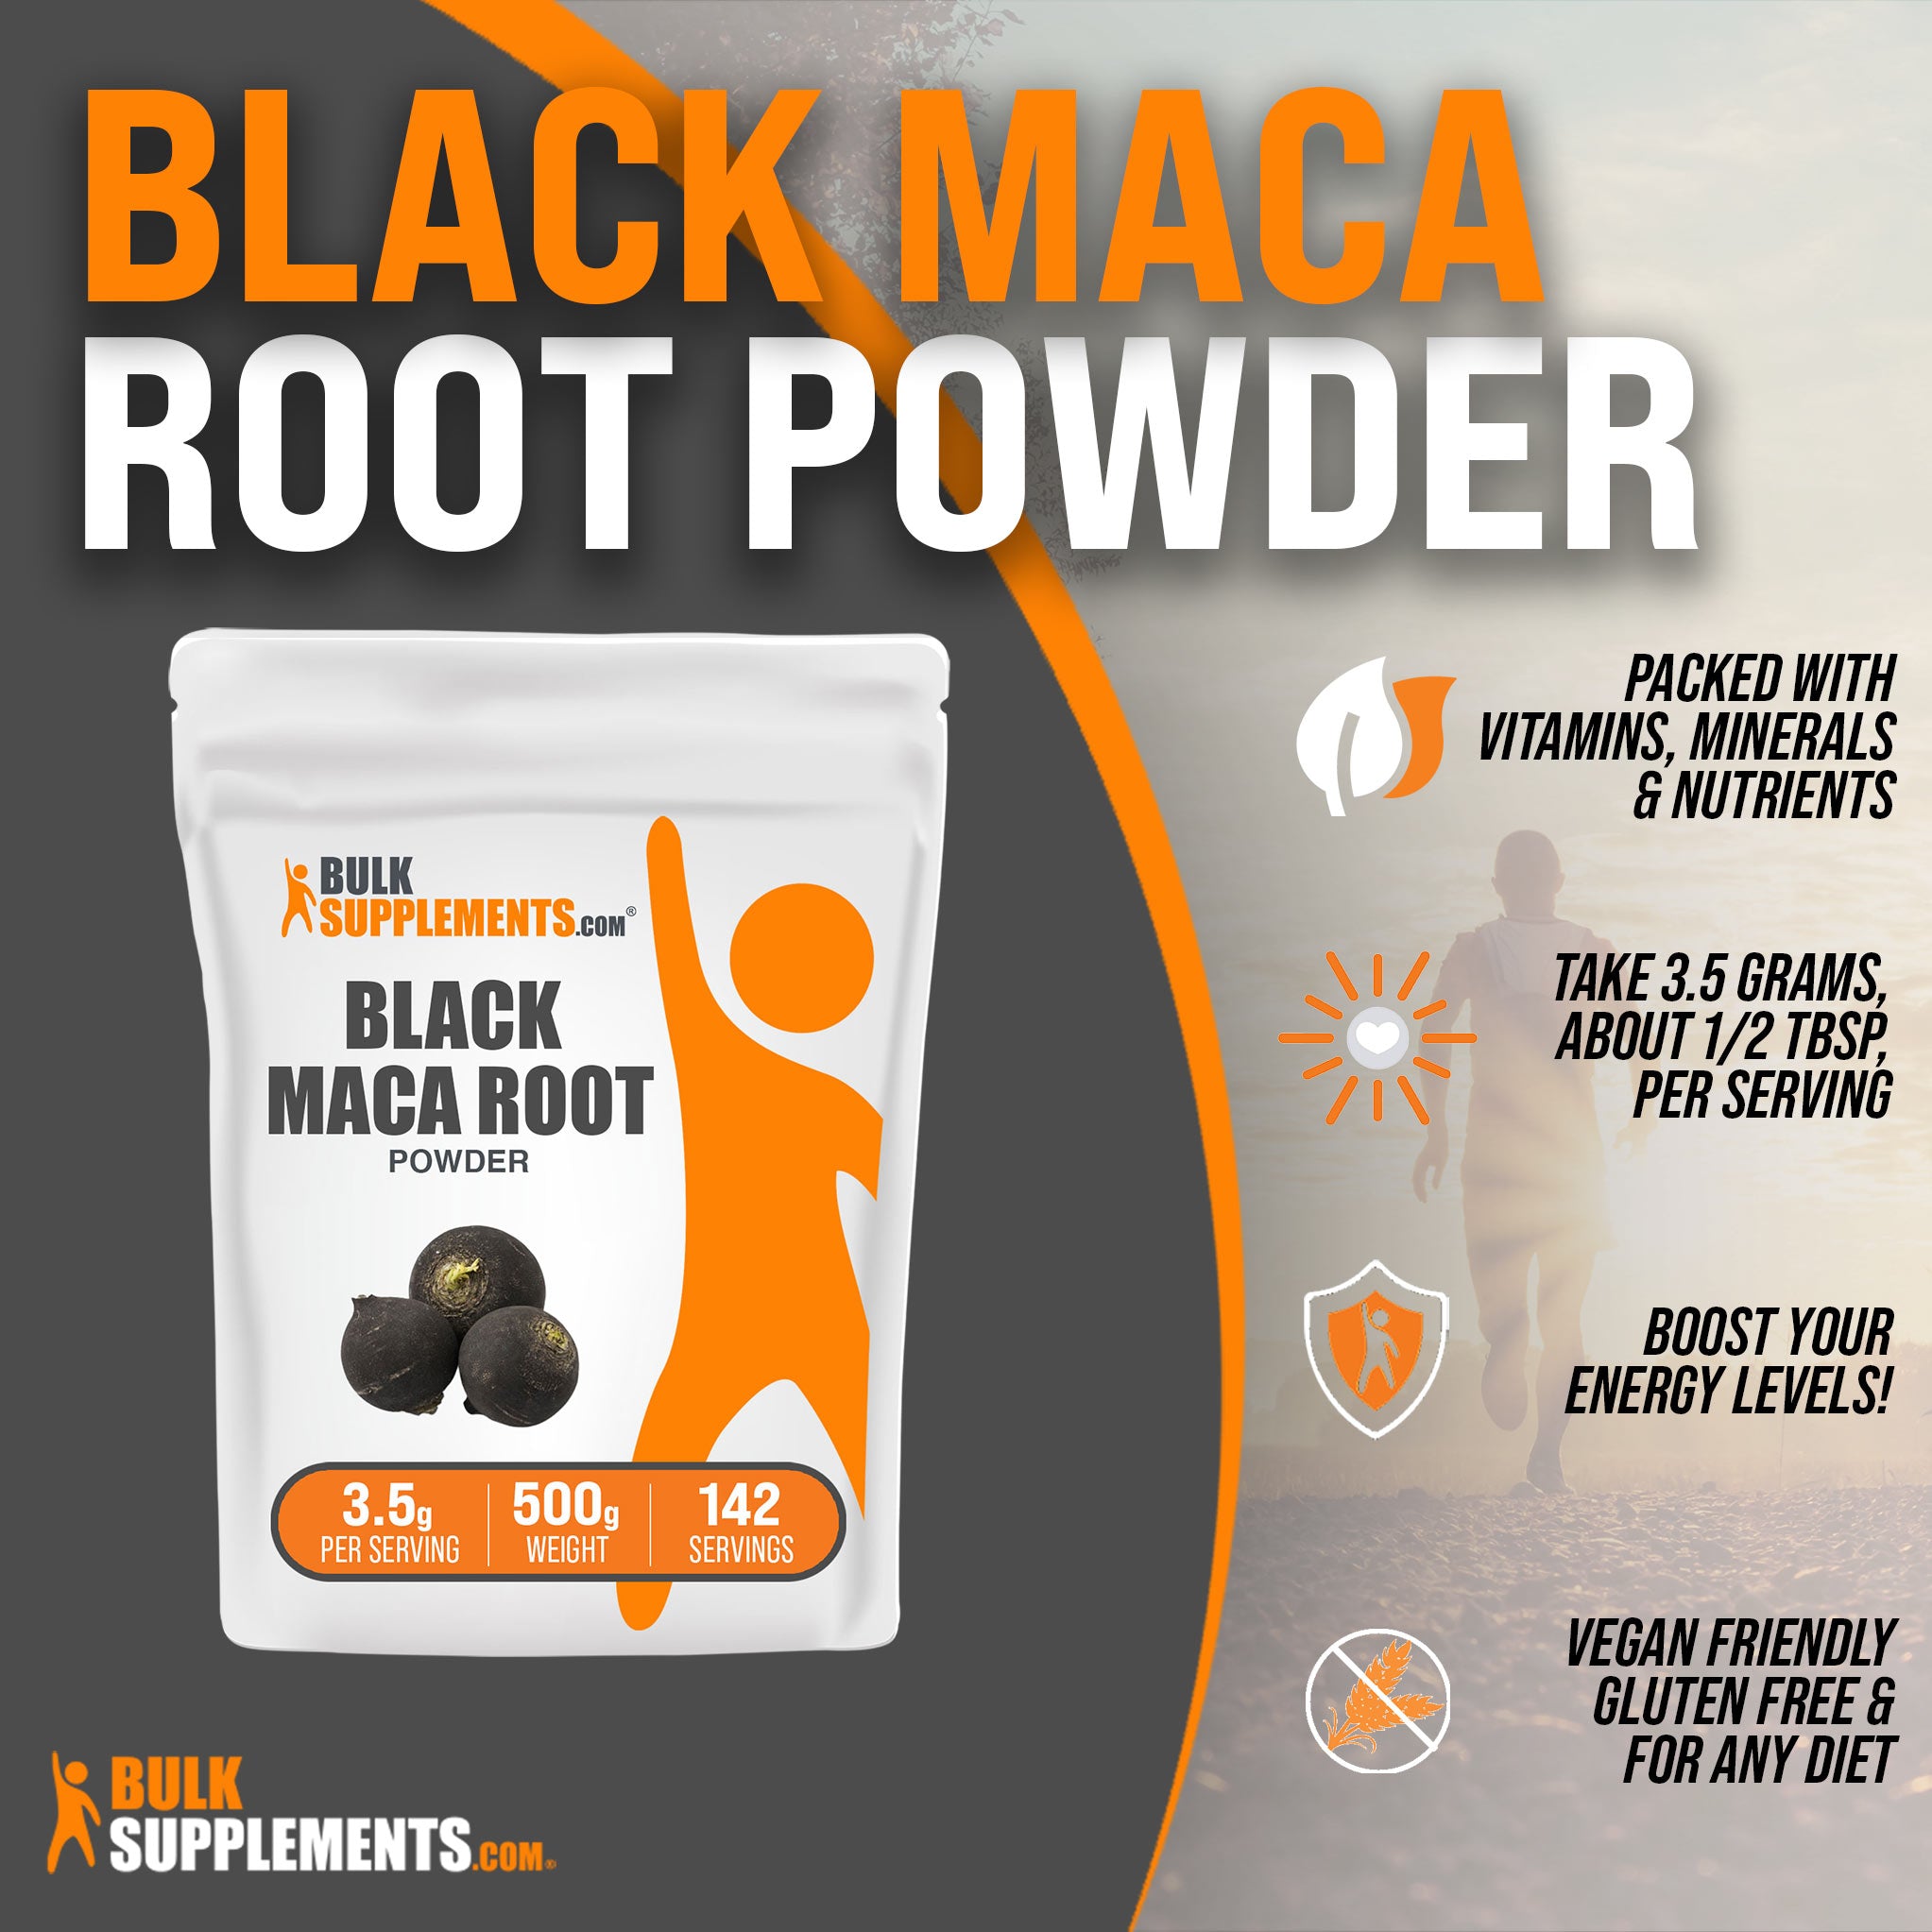 Black Maca Powder Benefits